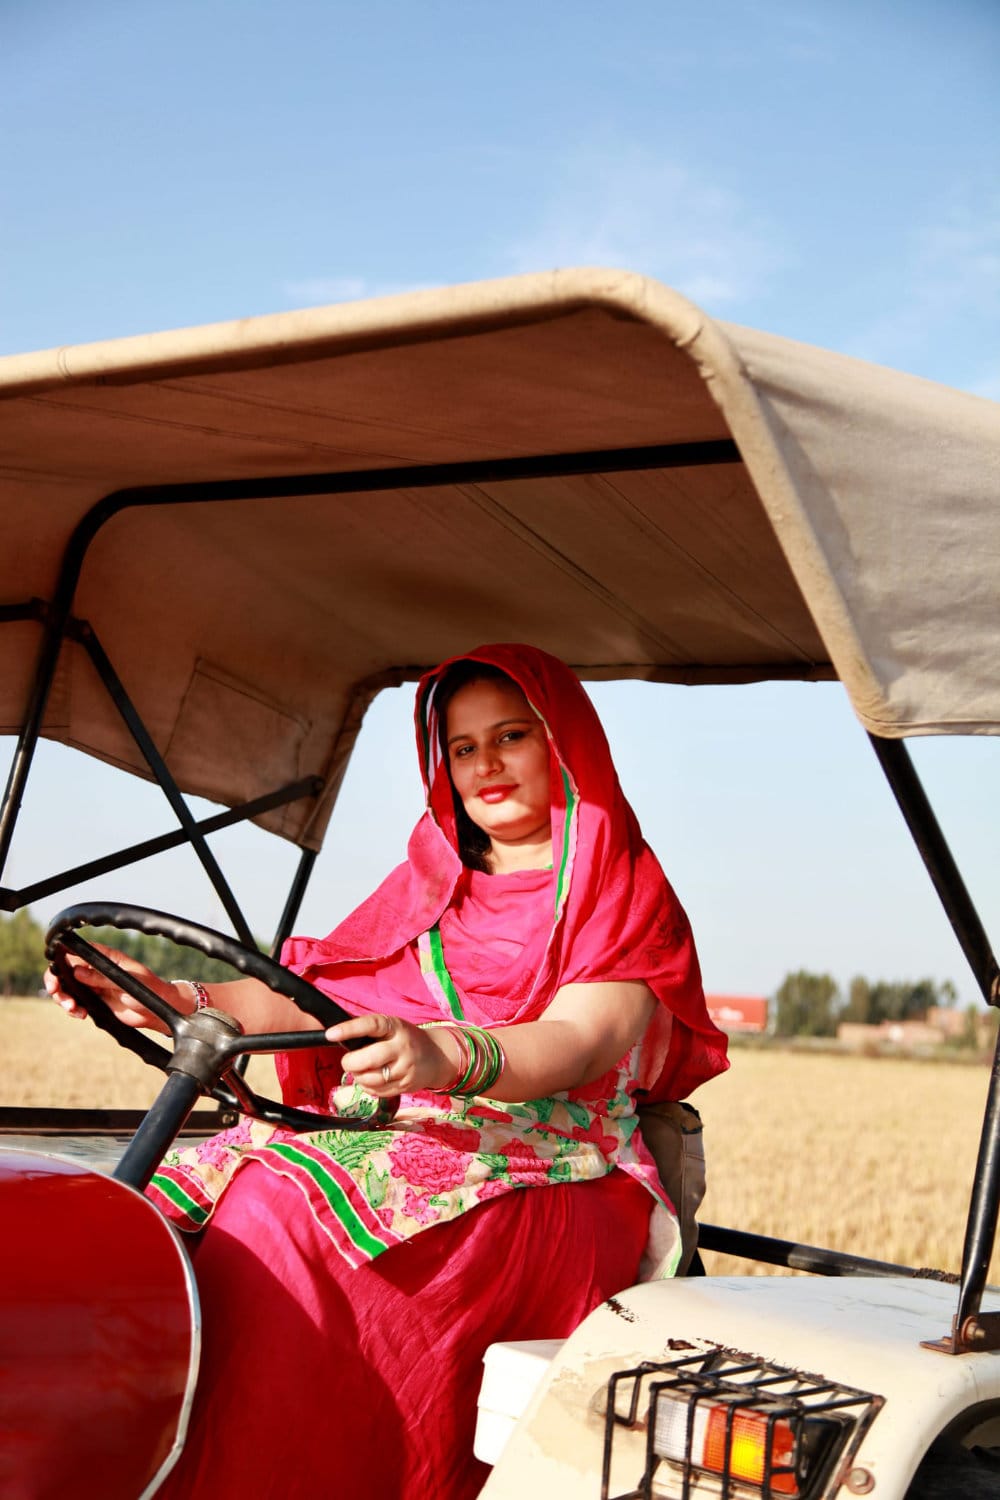 Woman on tractor in field